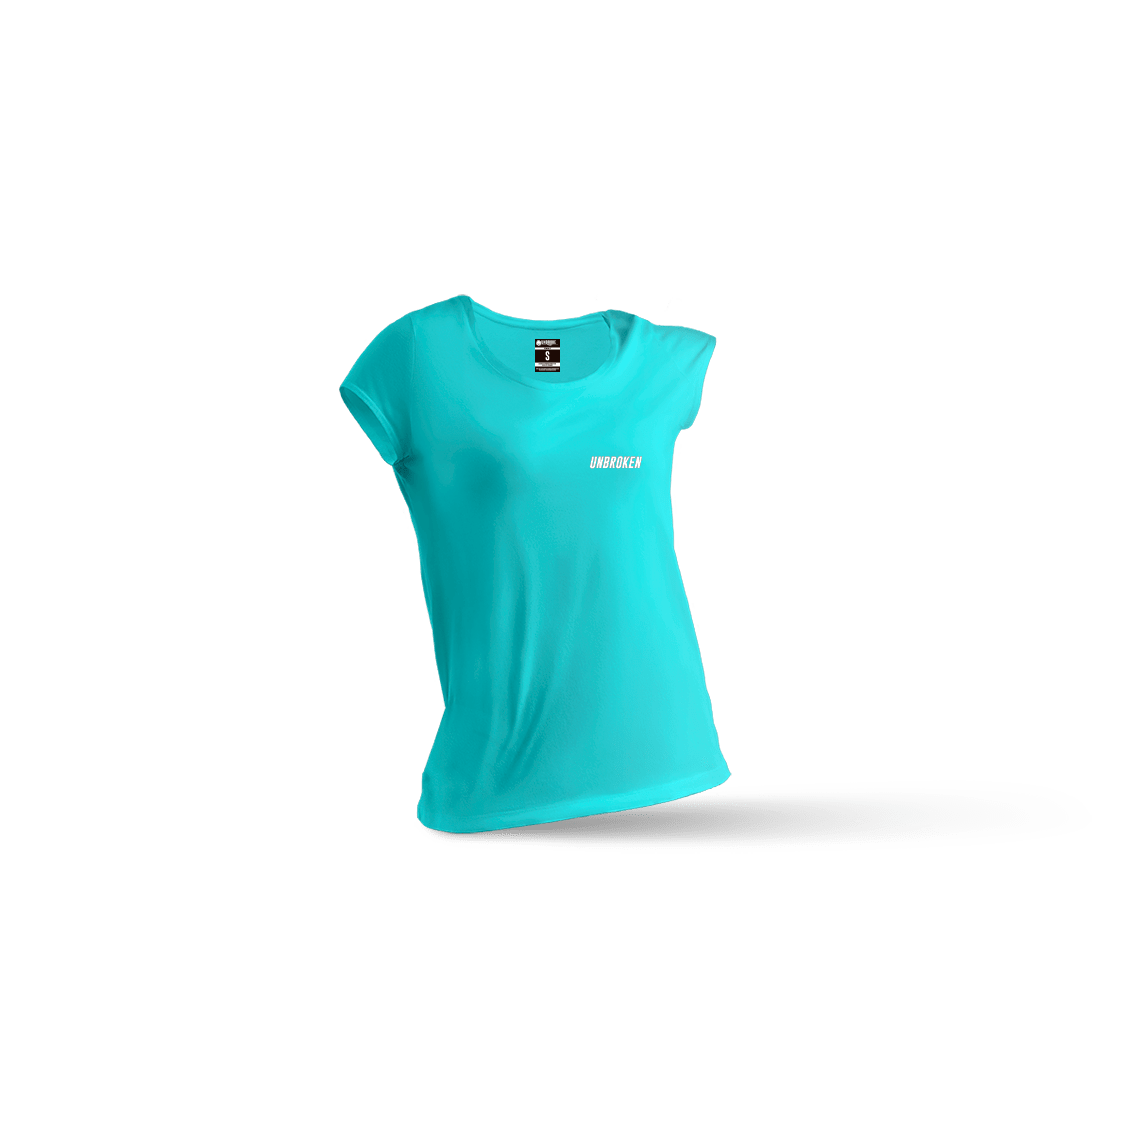 Camiseta Basic Mint mujer - Unbroken Sports Wear 